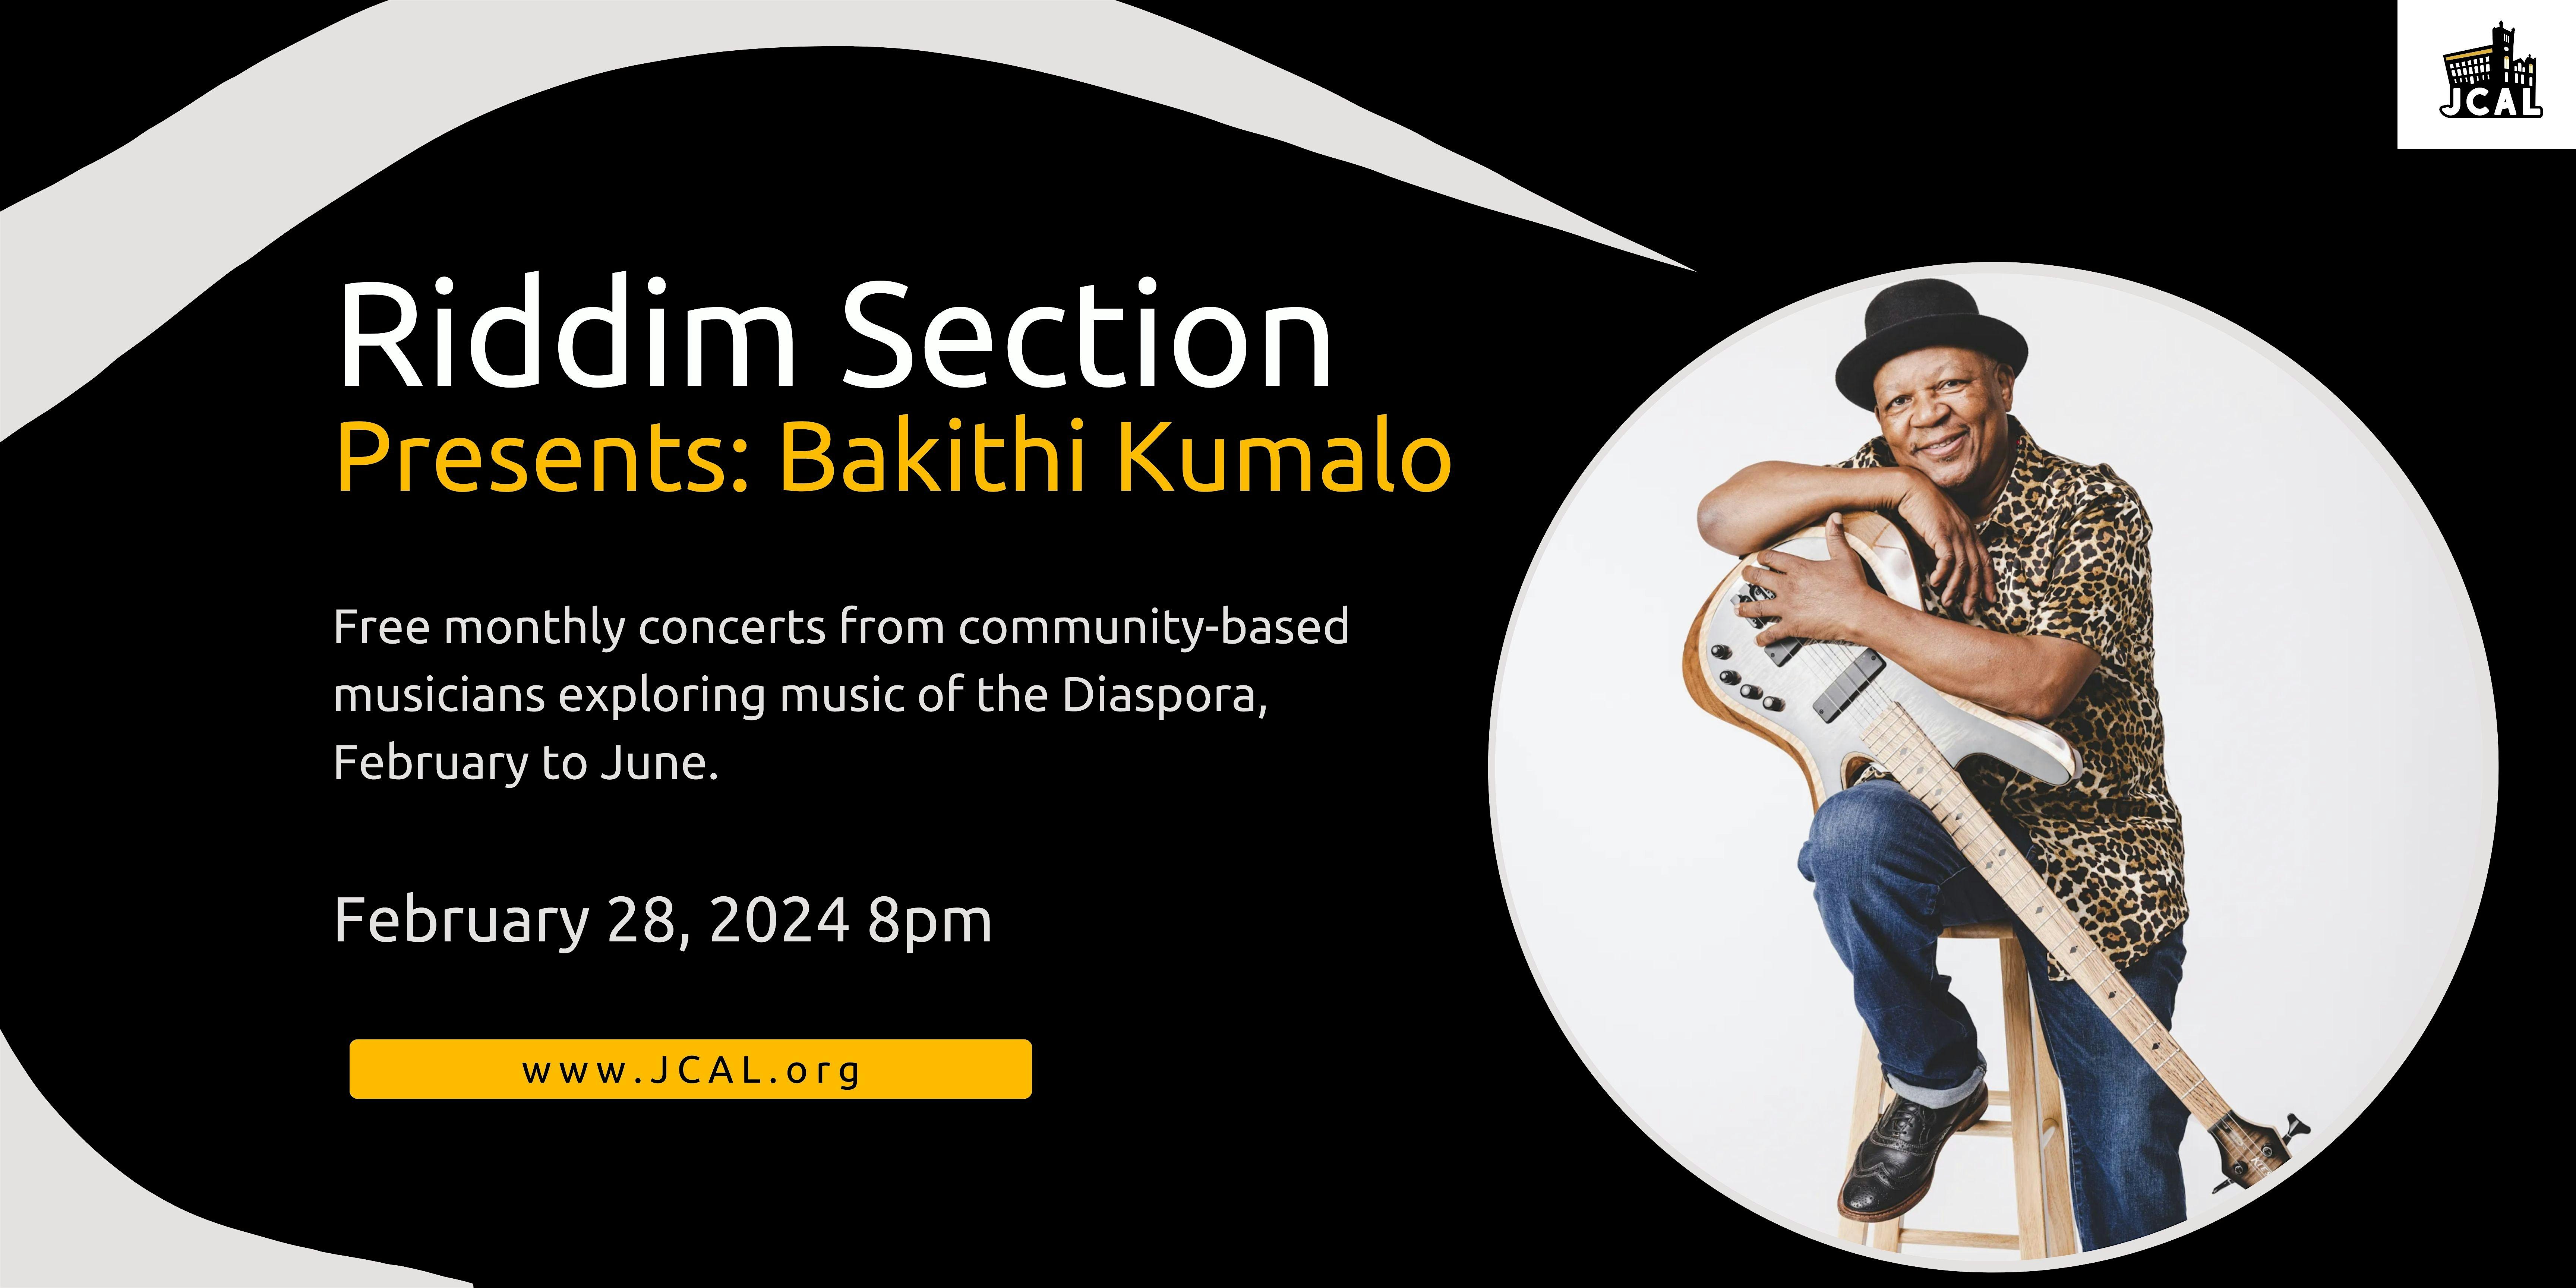 Riddim Section Presents: Bakithi Kumalo and Friends